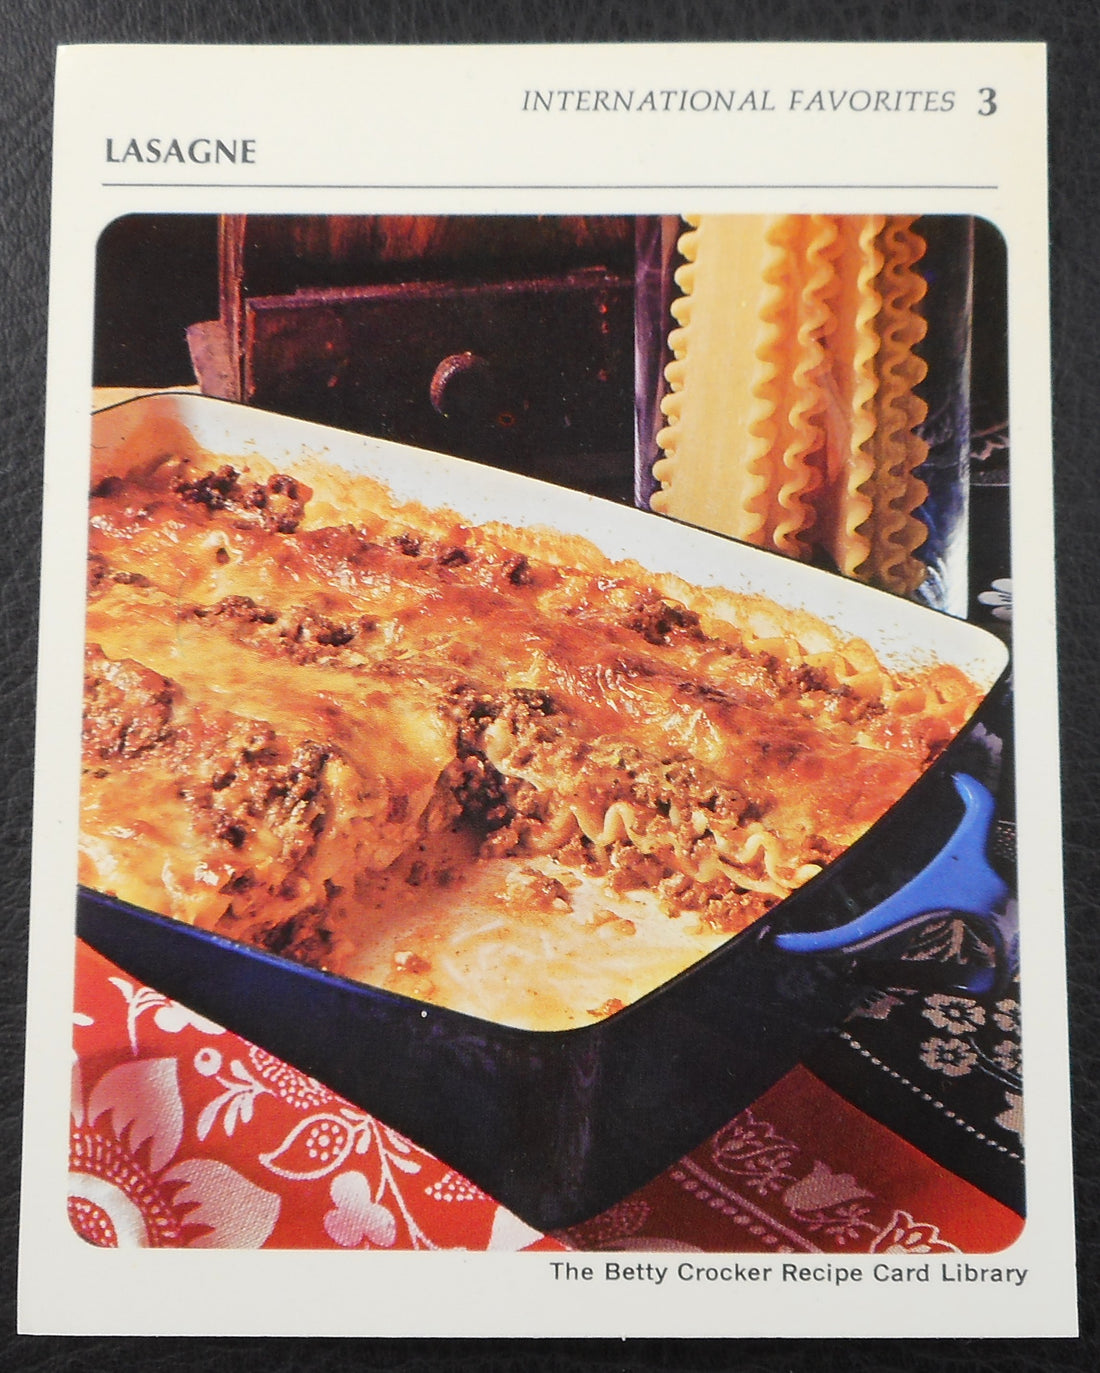 1971 Betty Crocker Recipe Library Card - Blue Dansk Lasagna Pan